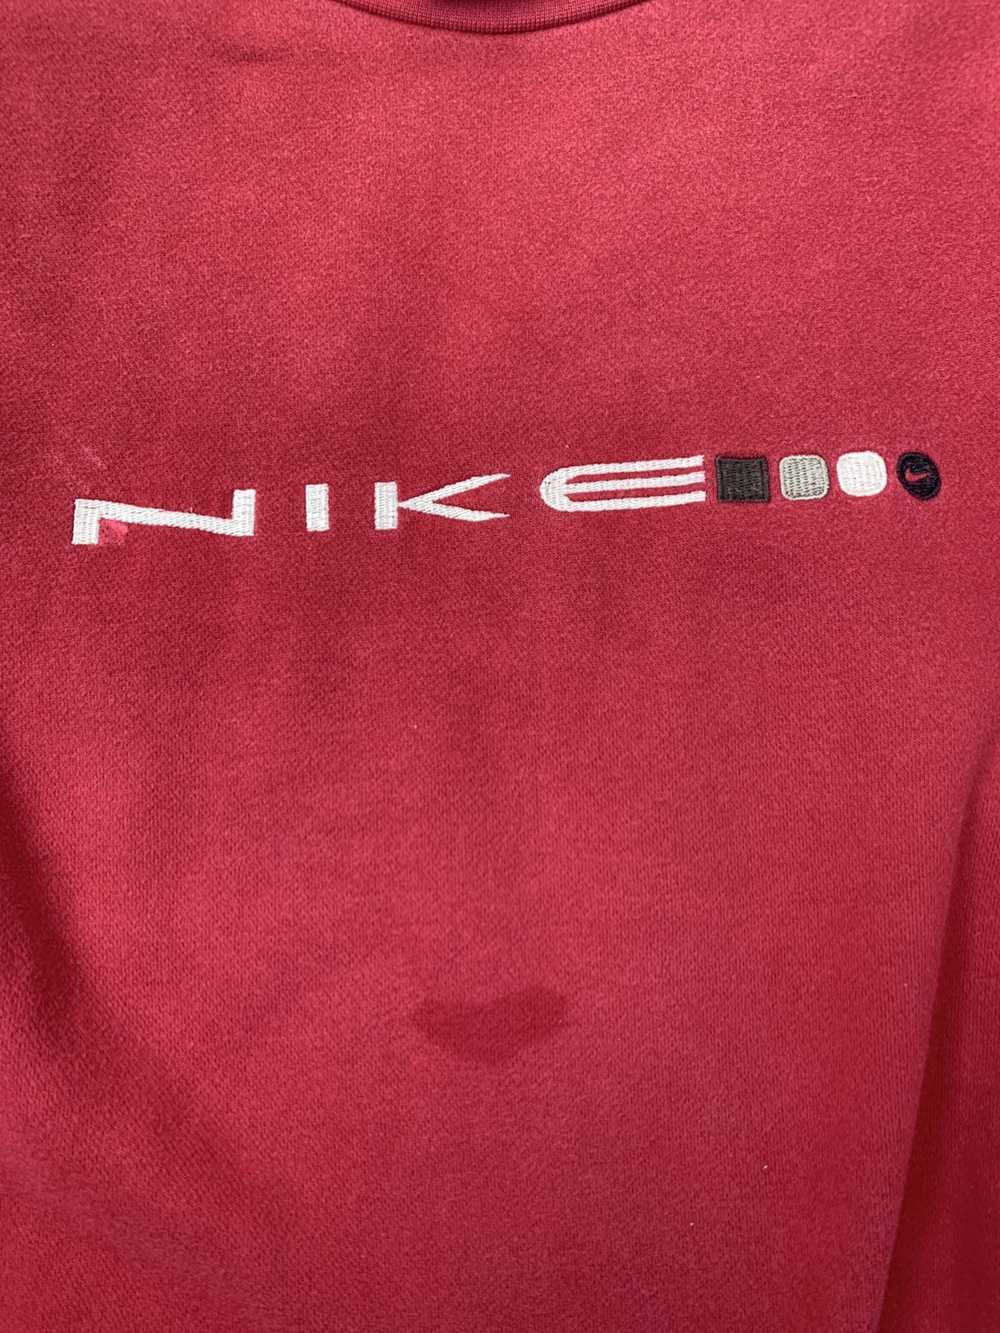 Nike Vintage 80’s Nike sweater - image 3